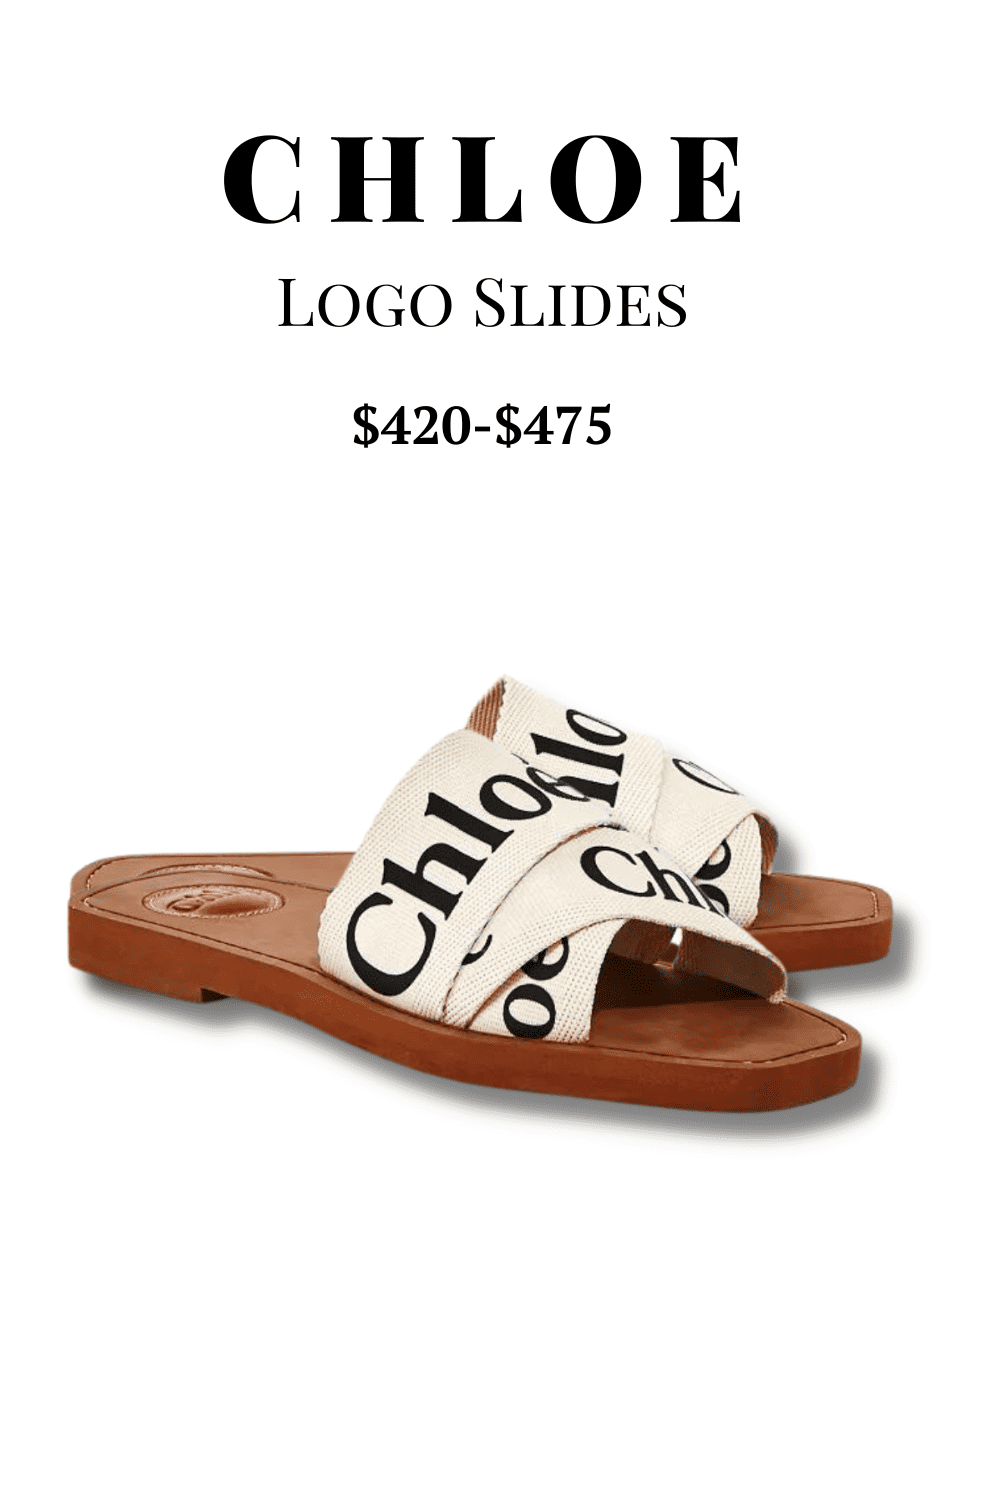 Chloe Logo Slides New Pricing